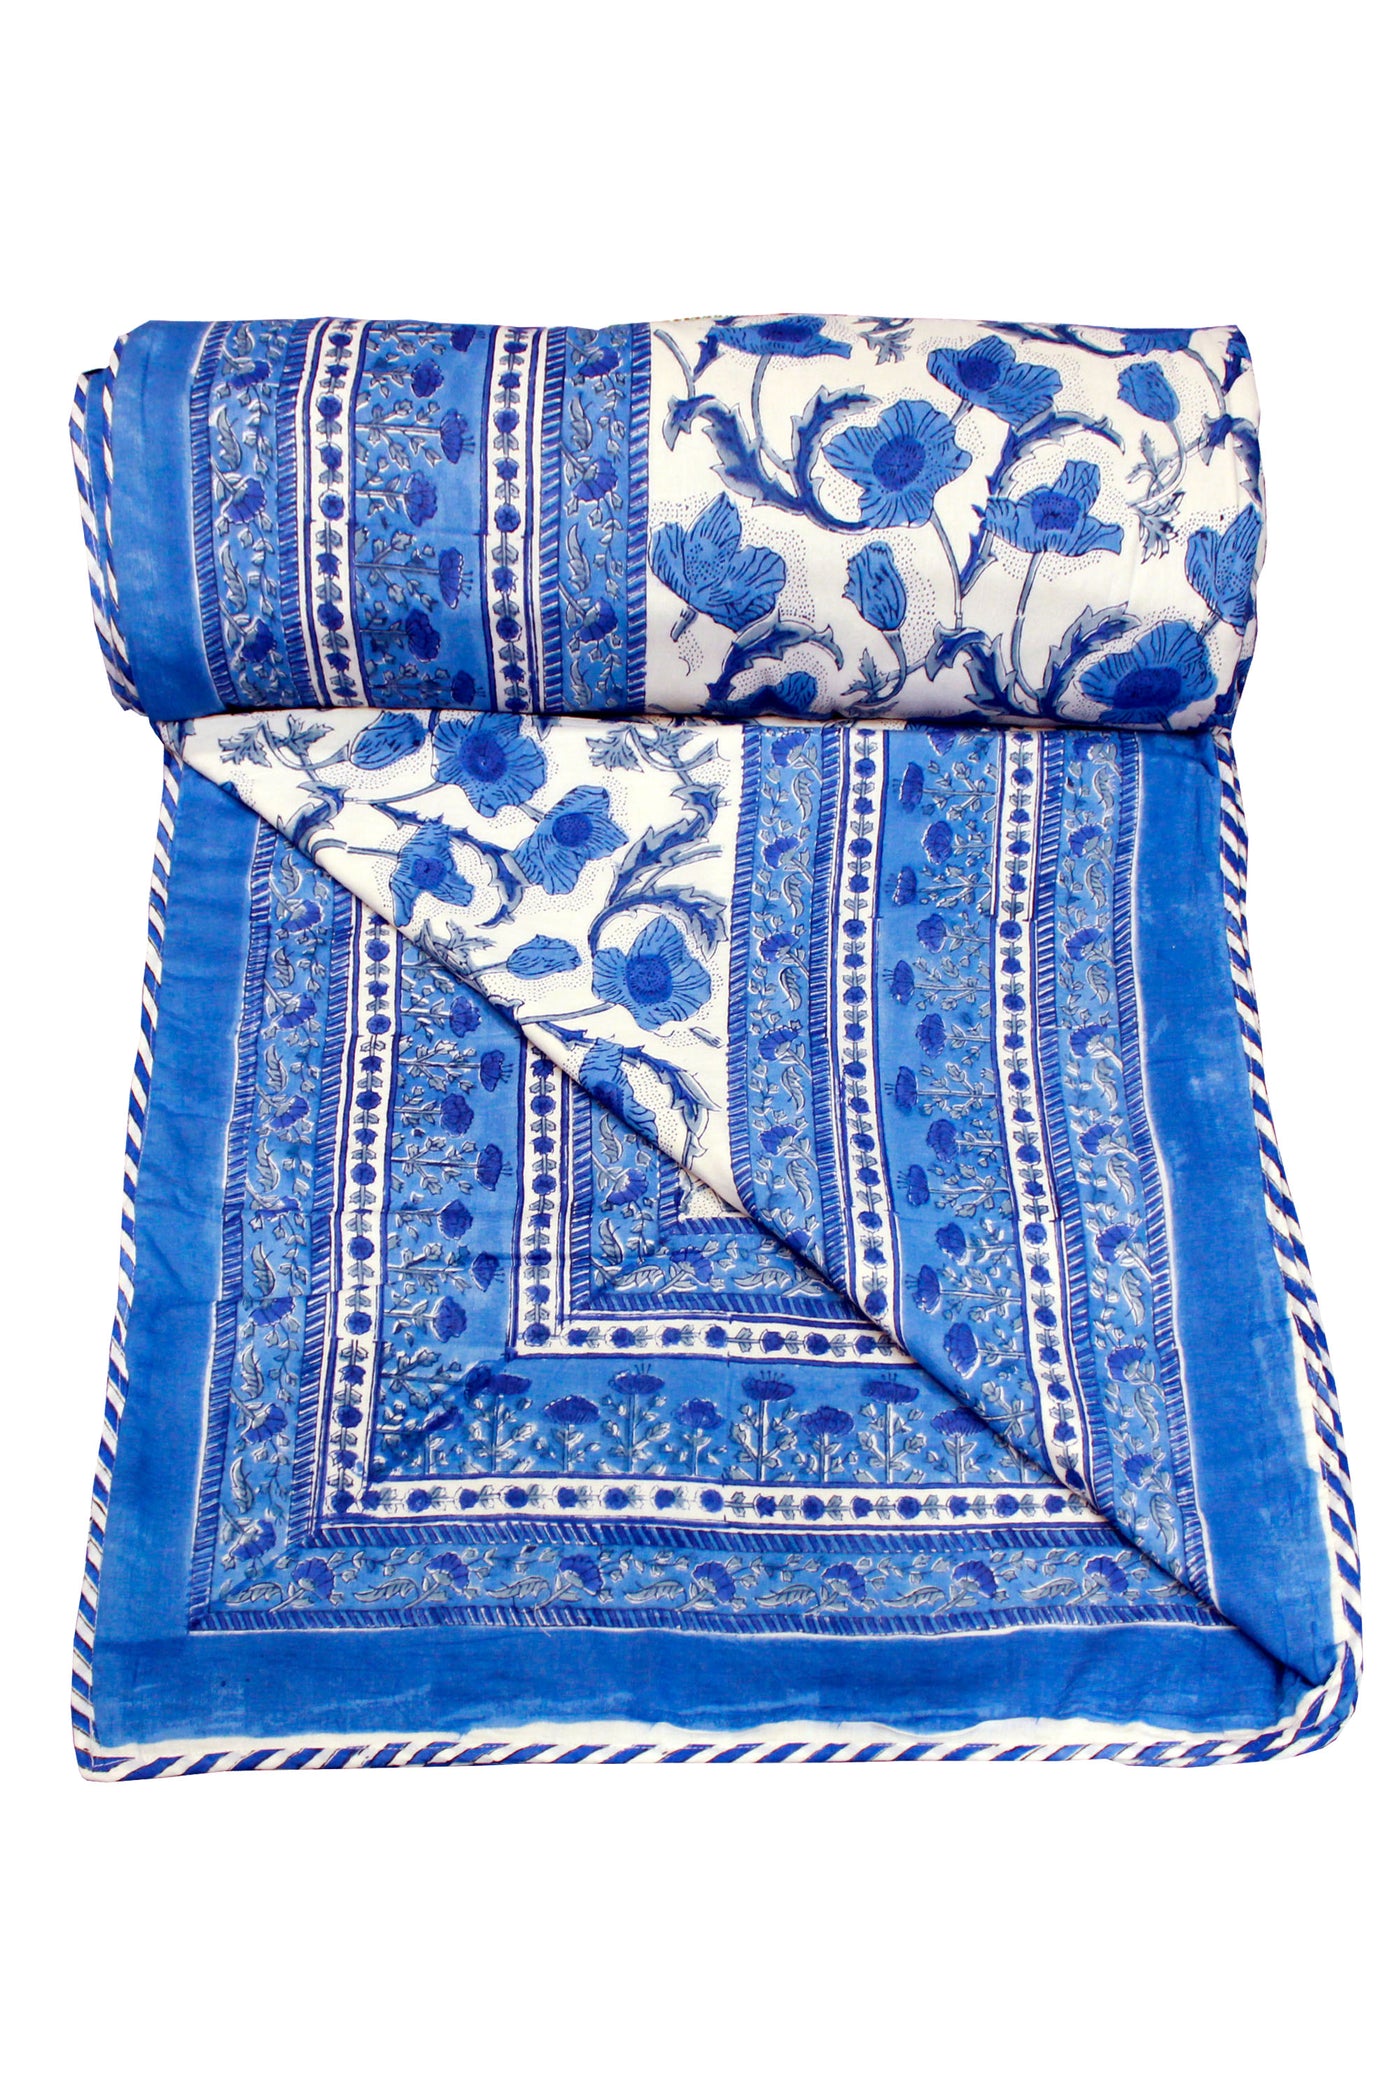 Cotton Flower Jaal Hand Block Print Dohar in Mid Blue